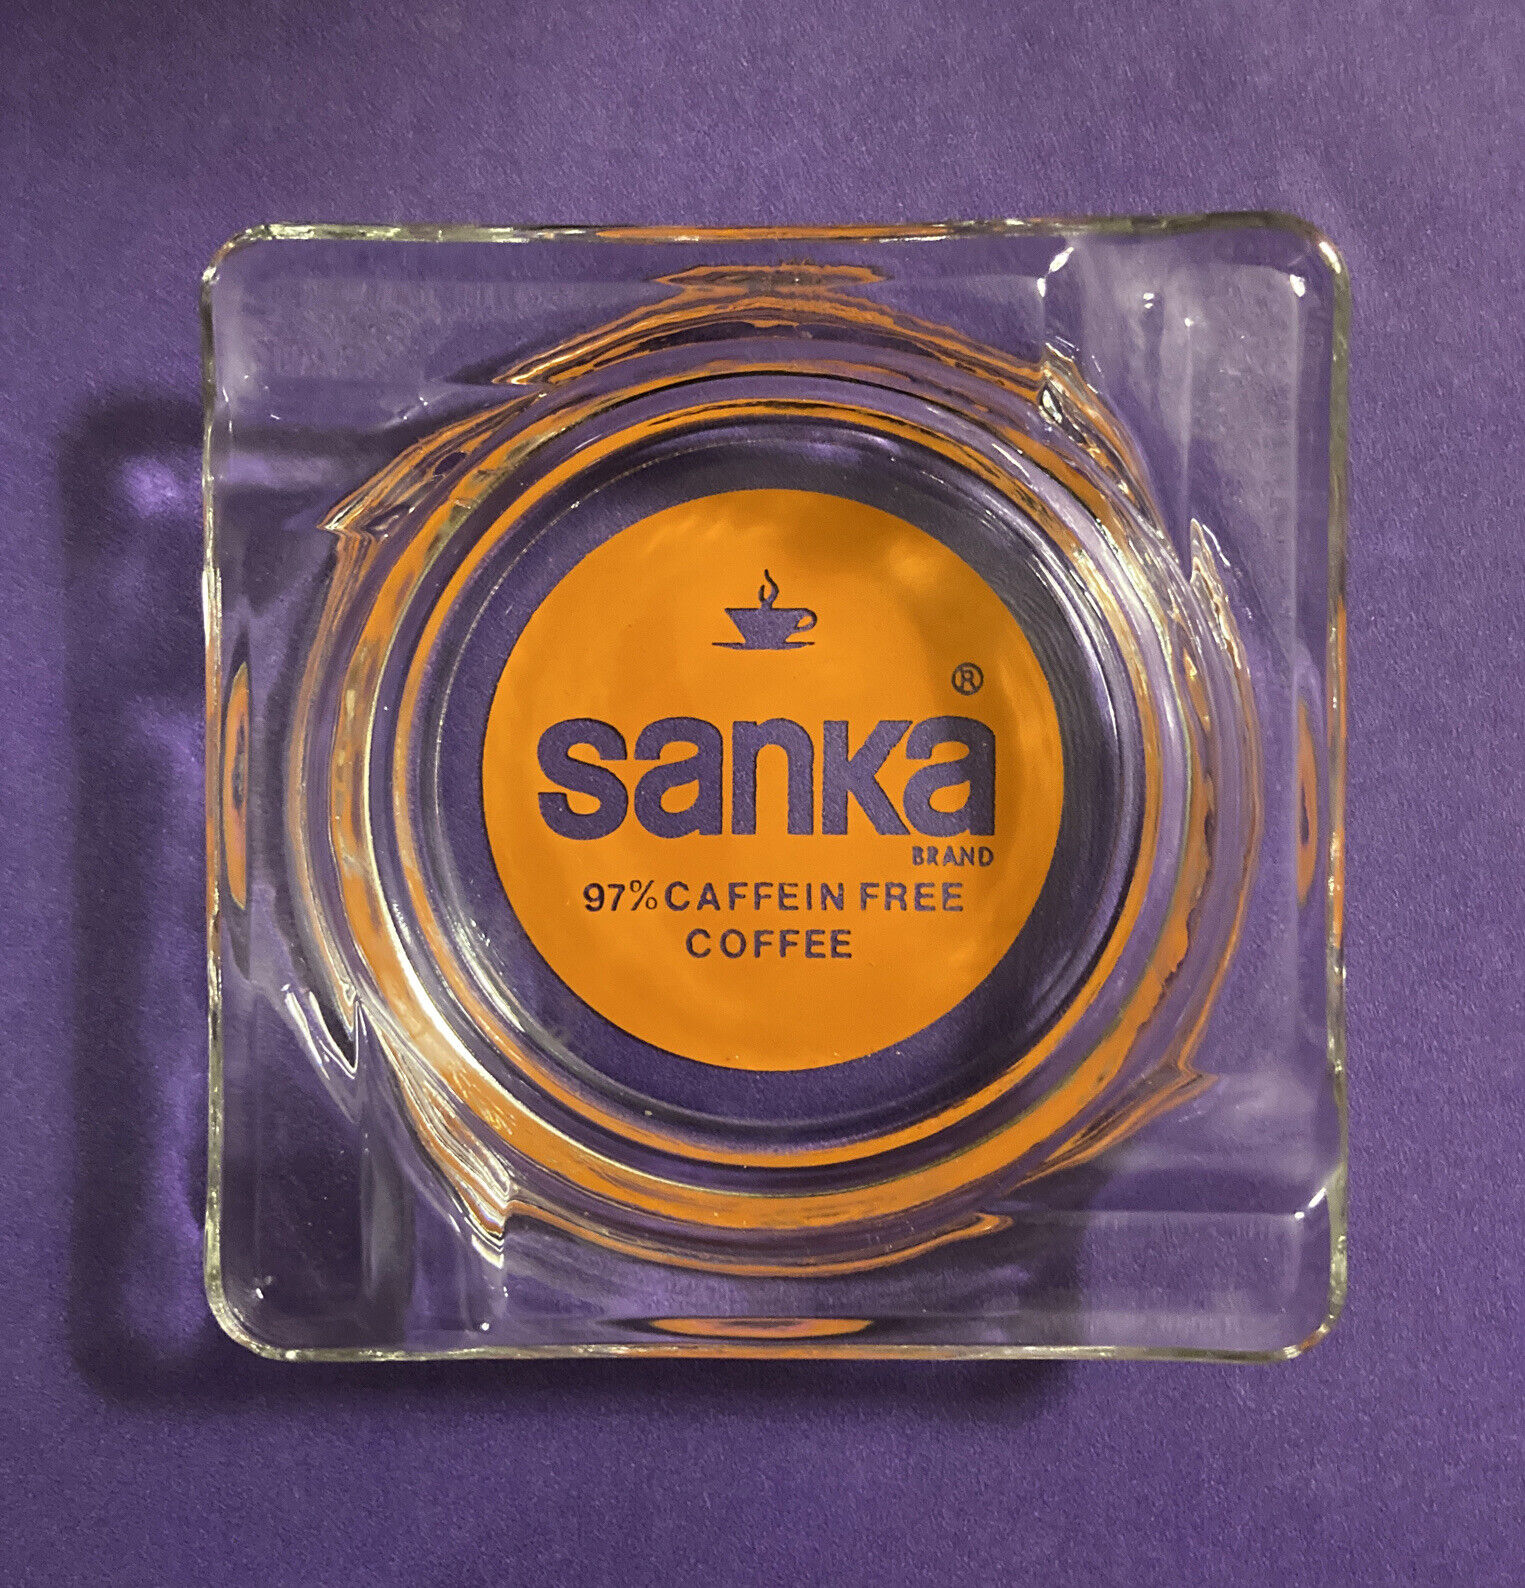 SANKA ASHTRAY COFFEE DECAF 97% CAFFEIN FREE CLEAR GLASS ORANGE SQUARE VINTAGE.